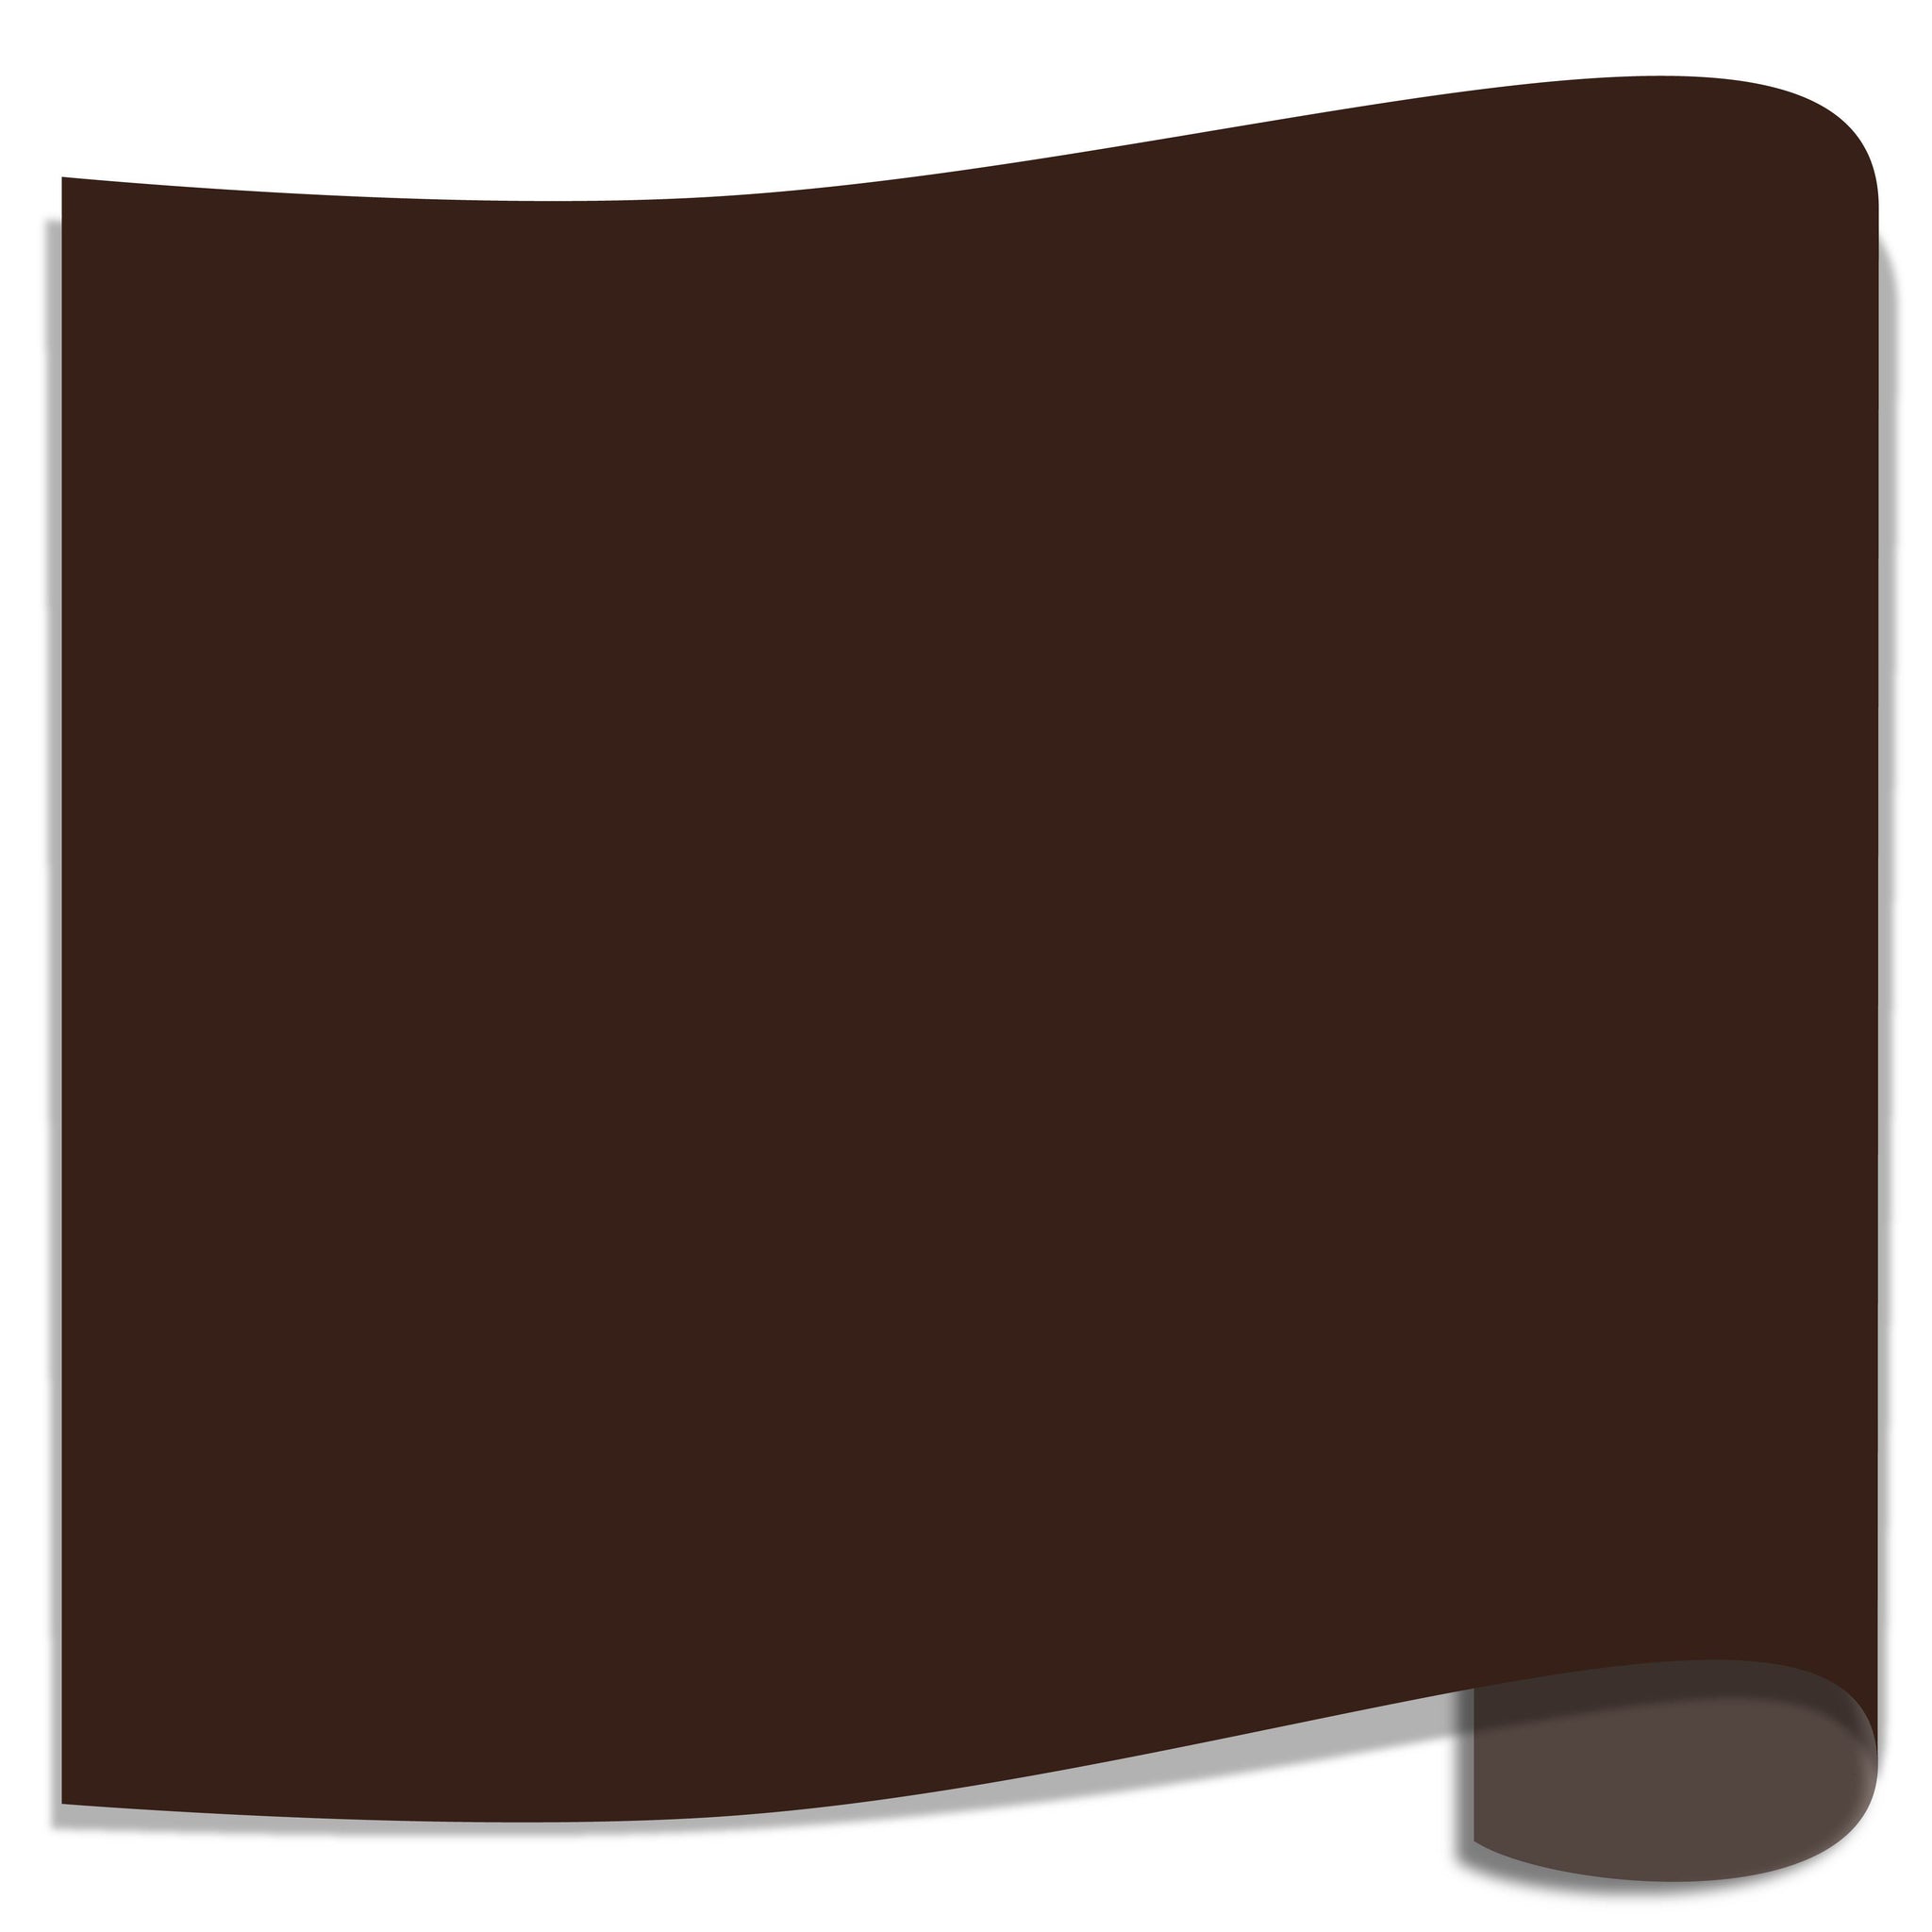 Chocolate Brown HTV Iron On T-shirt Vinyl Chocolate Brown Siser